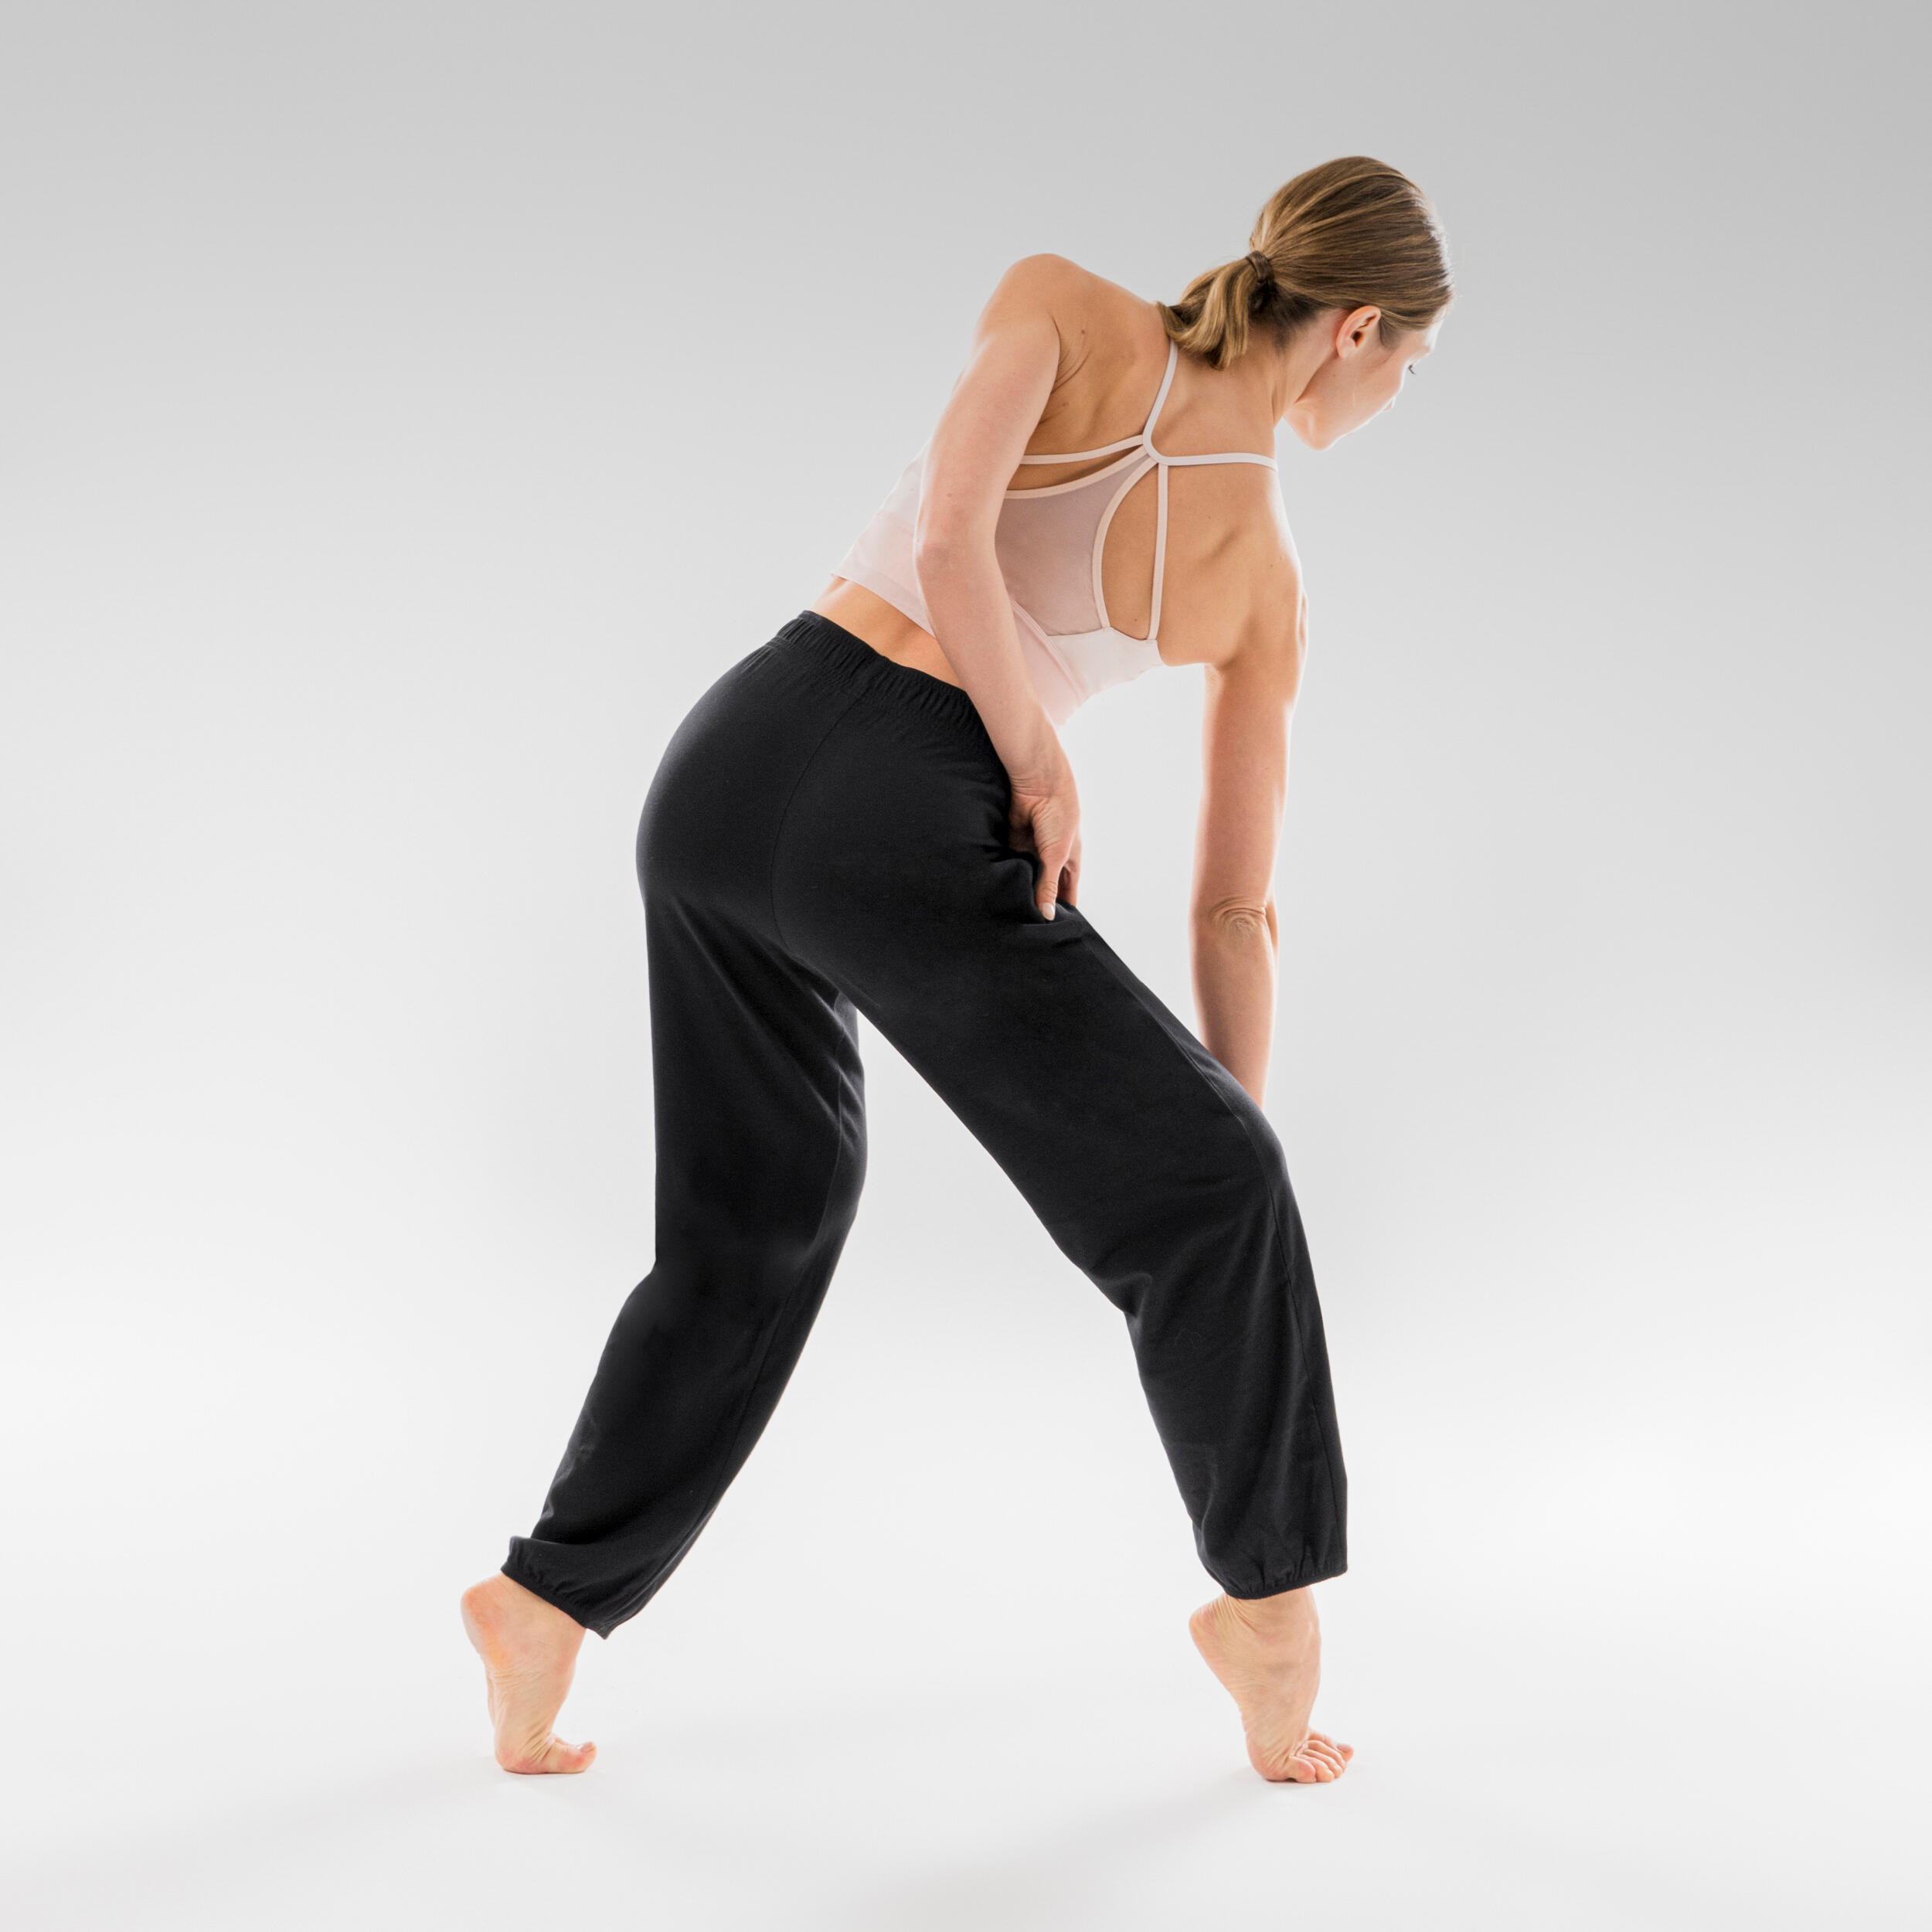 Women's Modern Dance Adjustable Bottoms - Black 4/8